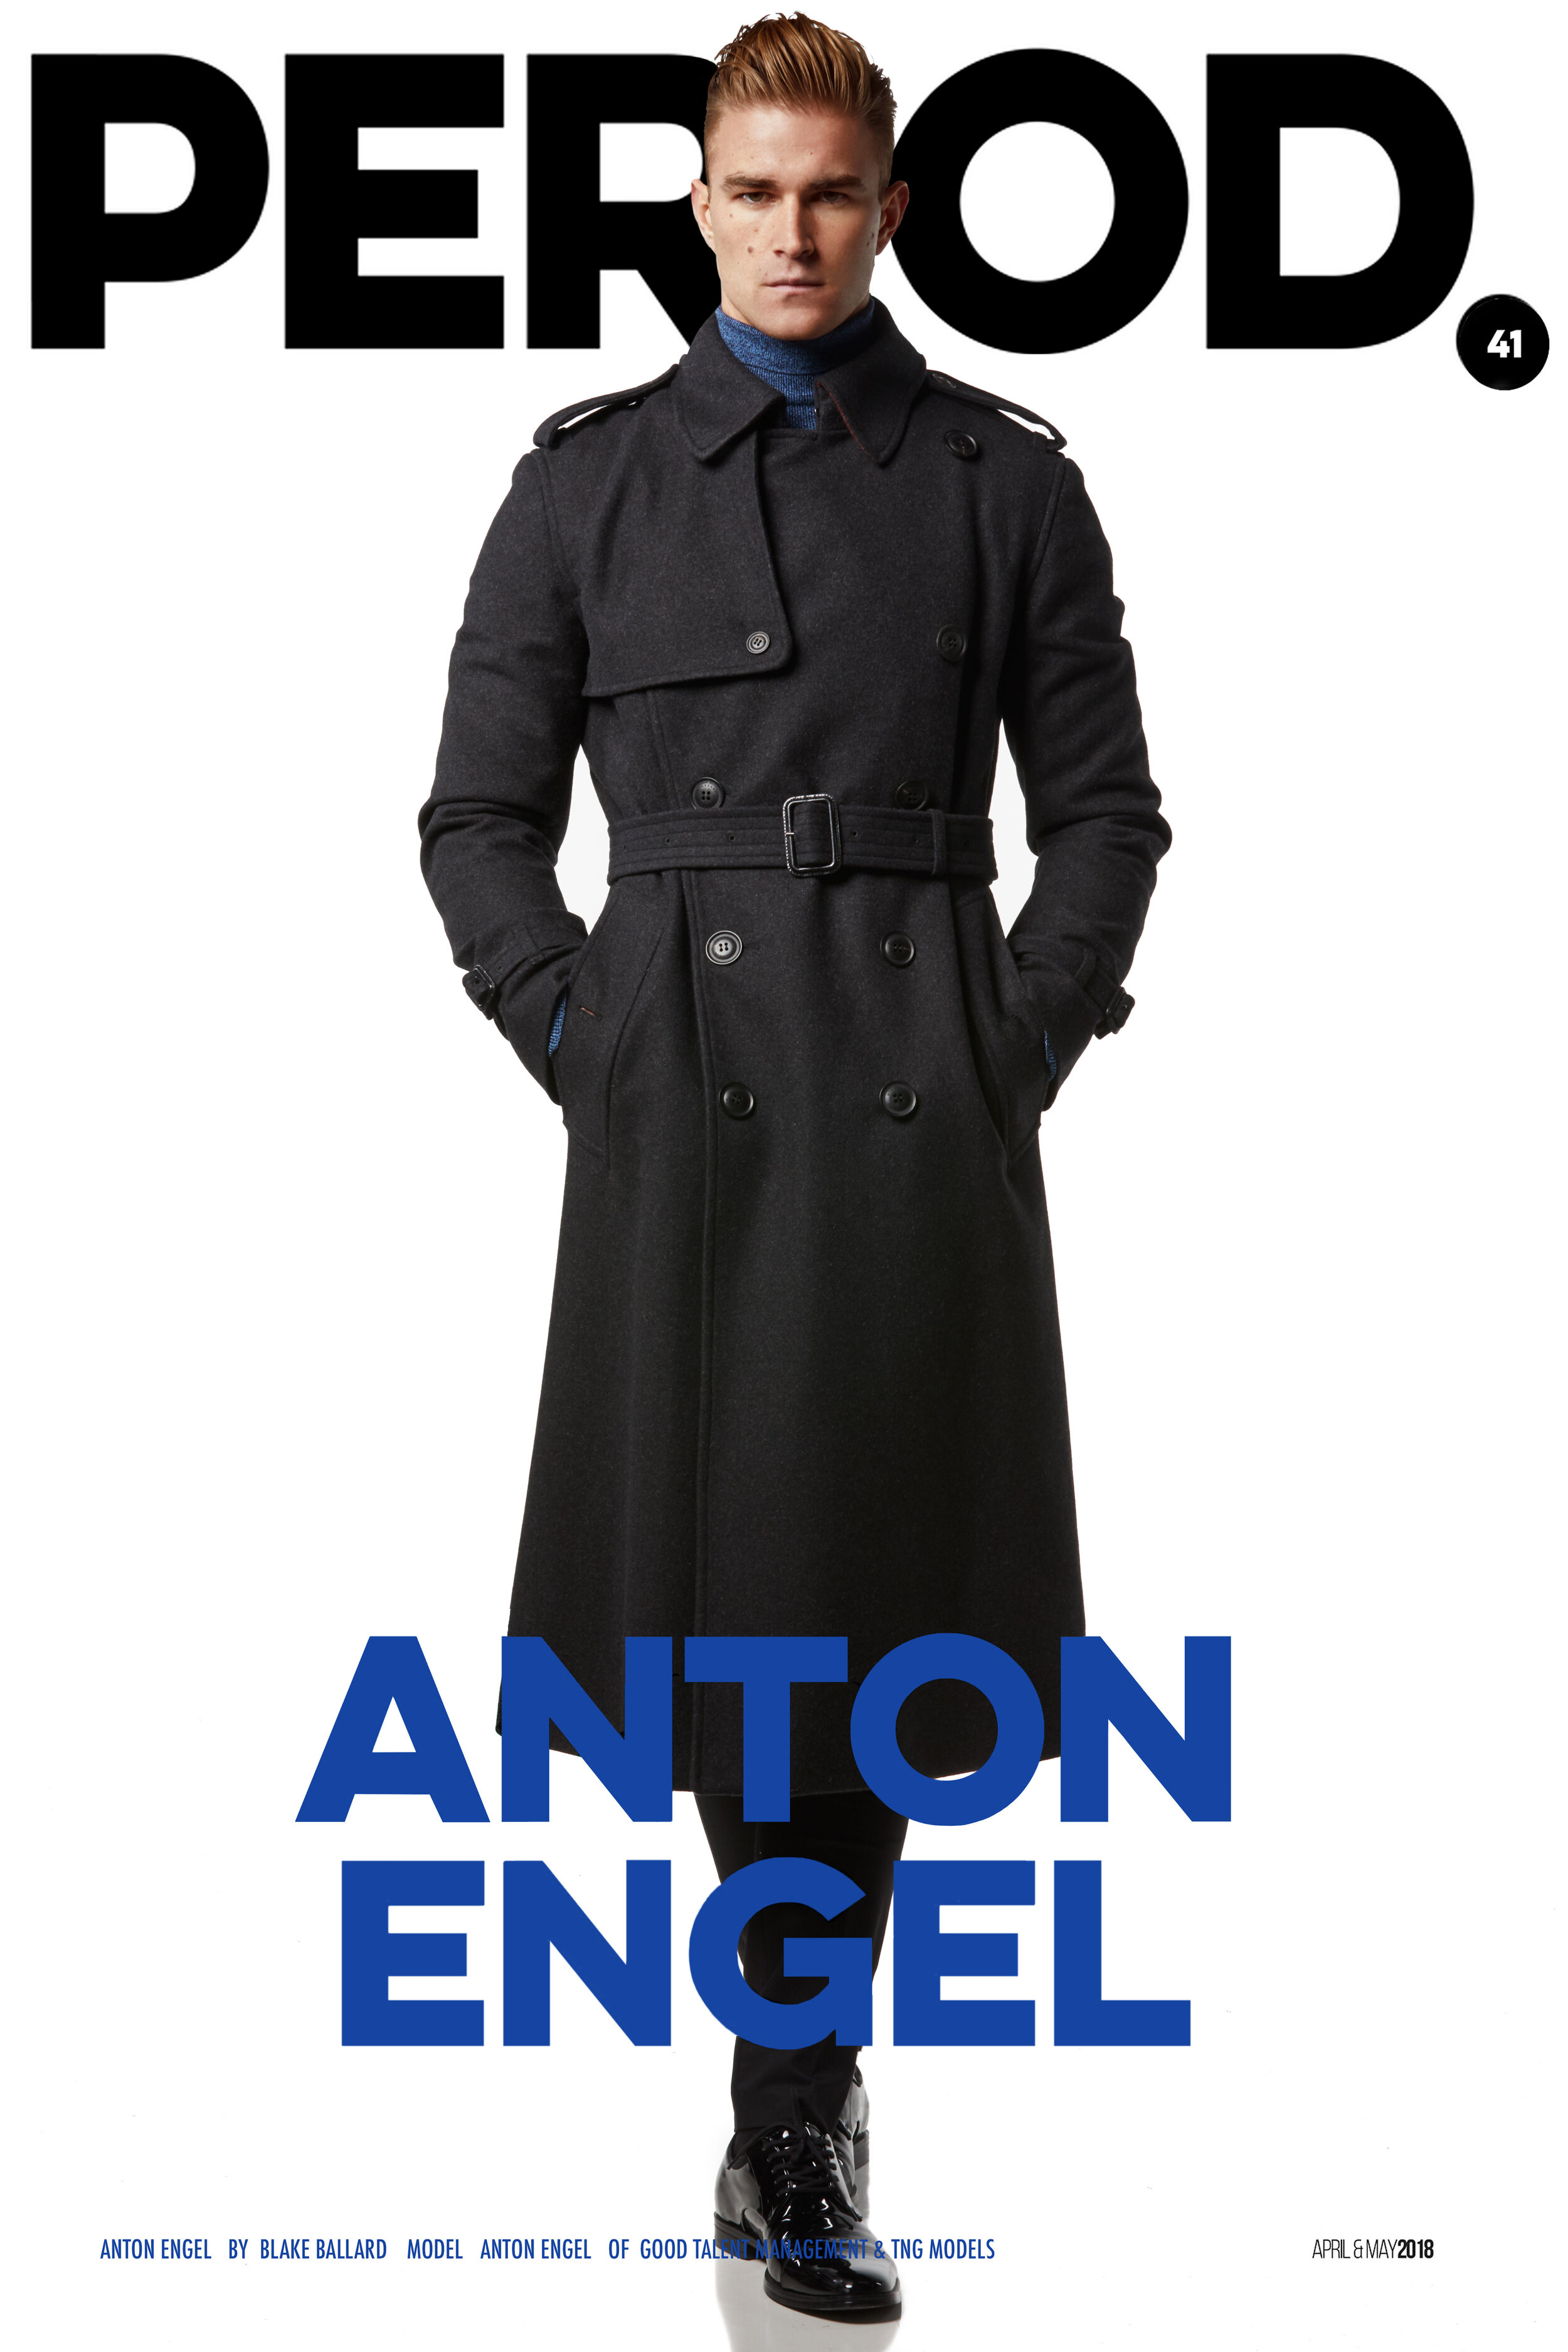 ANTON ENGEL